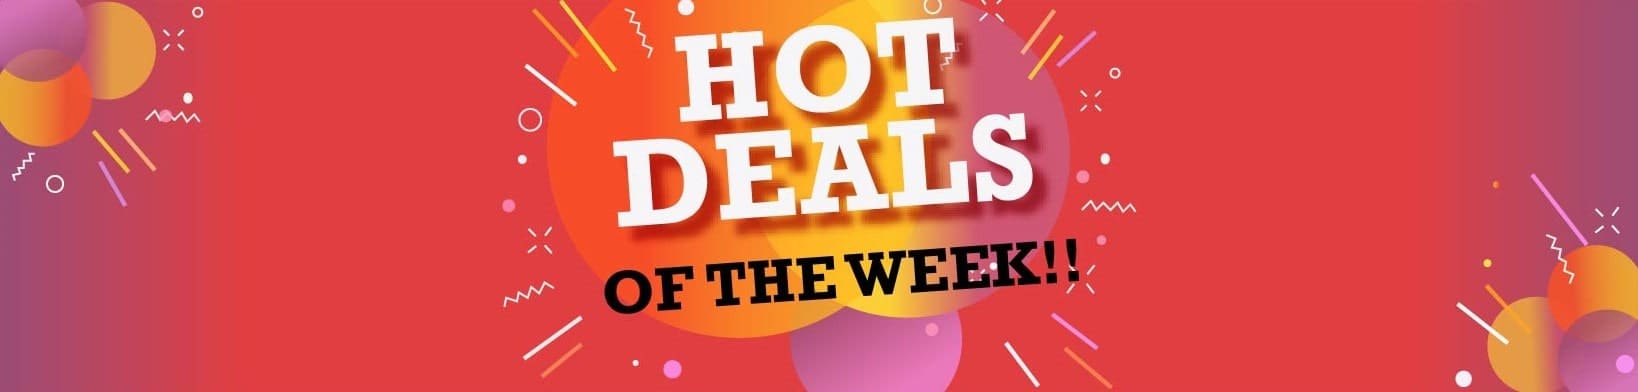 Hot Deals of the Week Banner